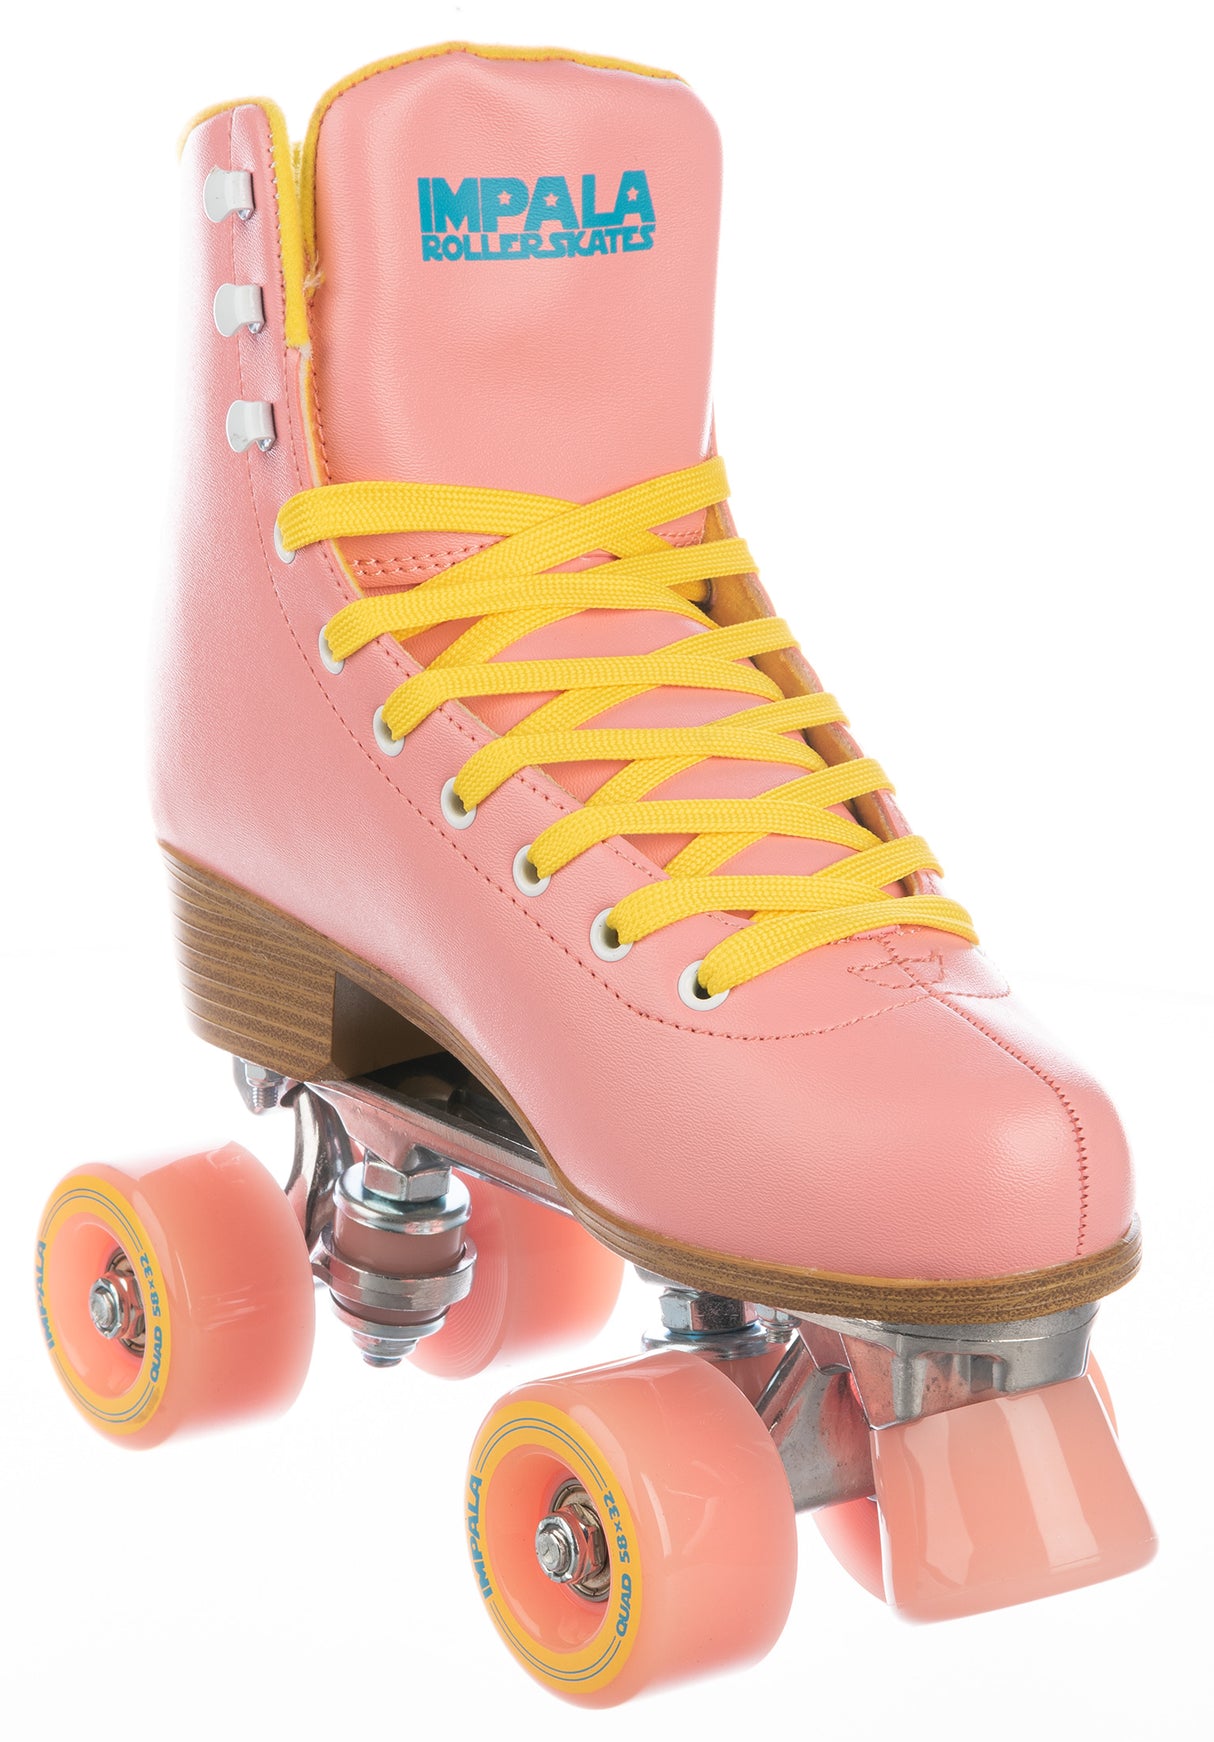 Quad Rollschuhe / Rollerskates pink-yellow Rückenansicht